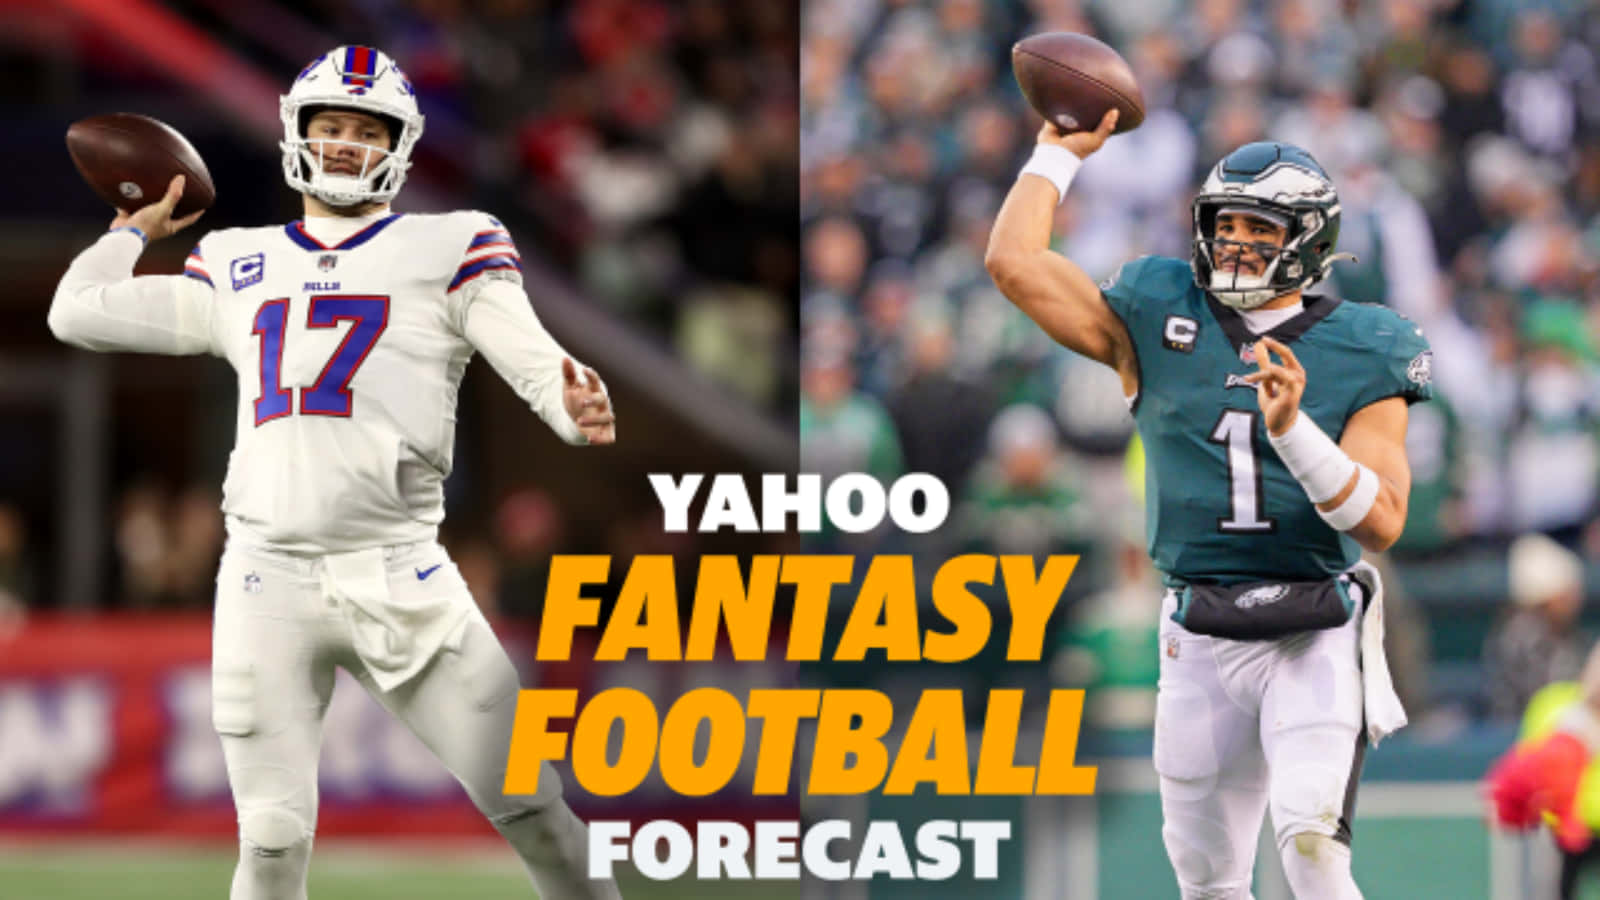 Yahoo Fantasy Football Forecast For The Week Of November 1 Wallpaper